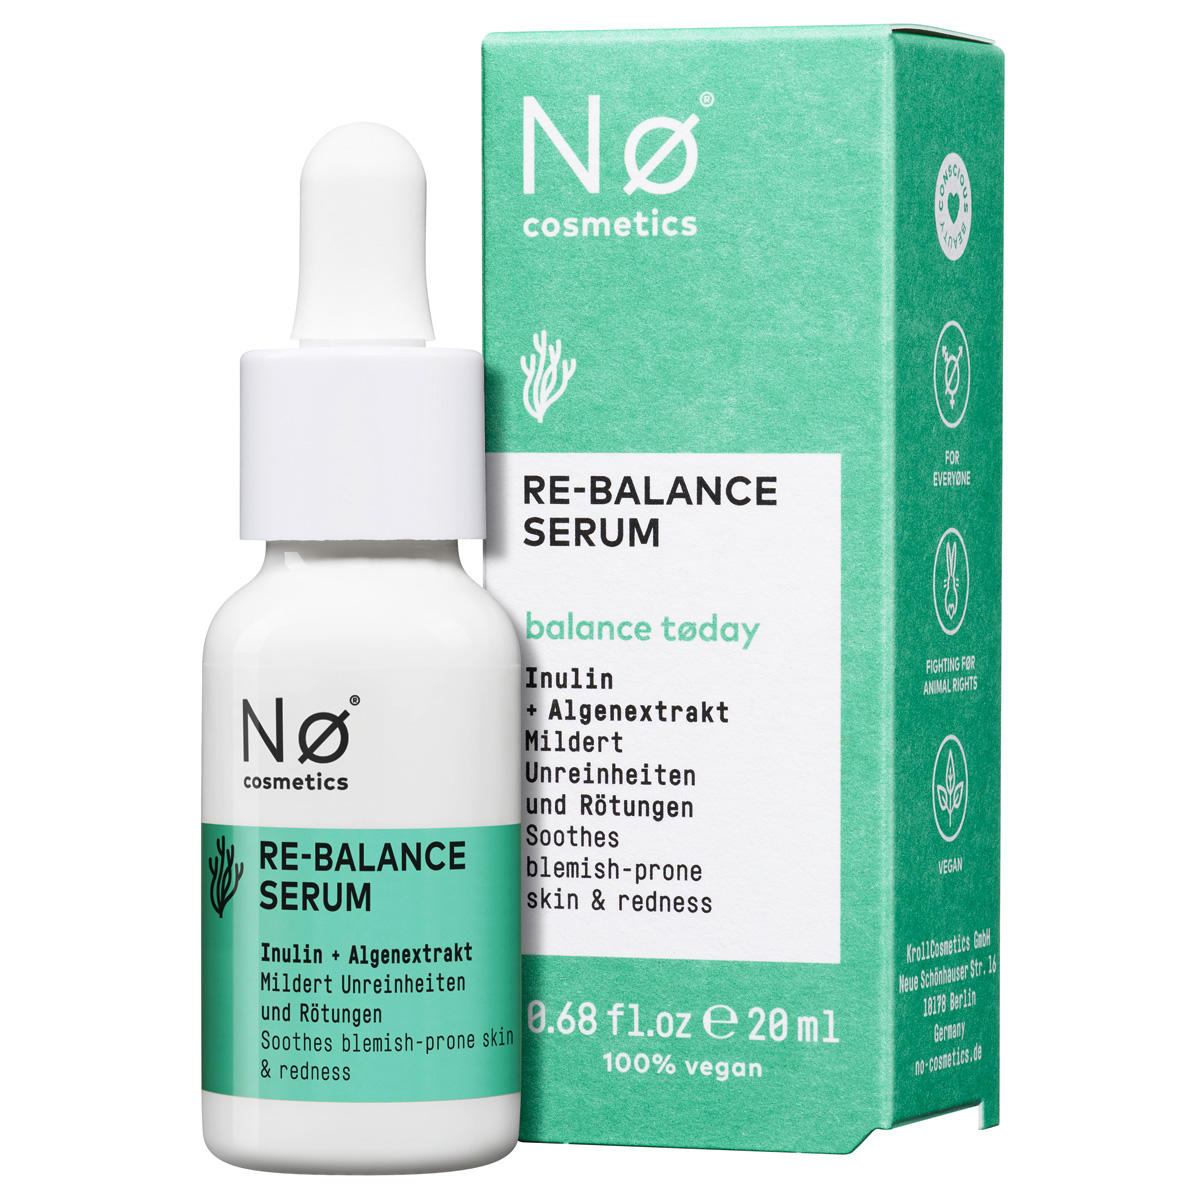 nø cosmetics balance tøday re-balance serum 20 ml